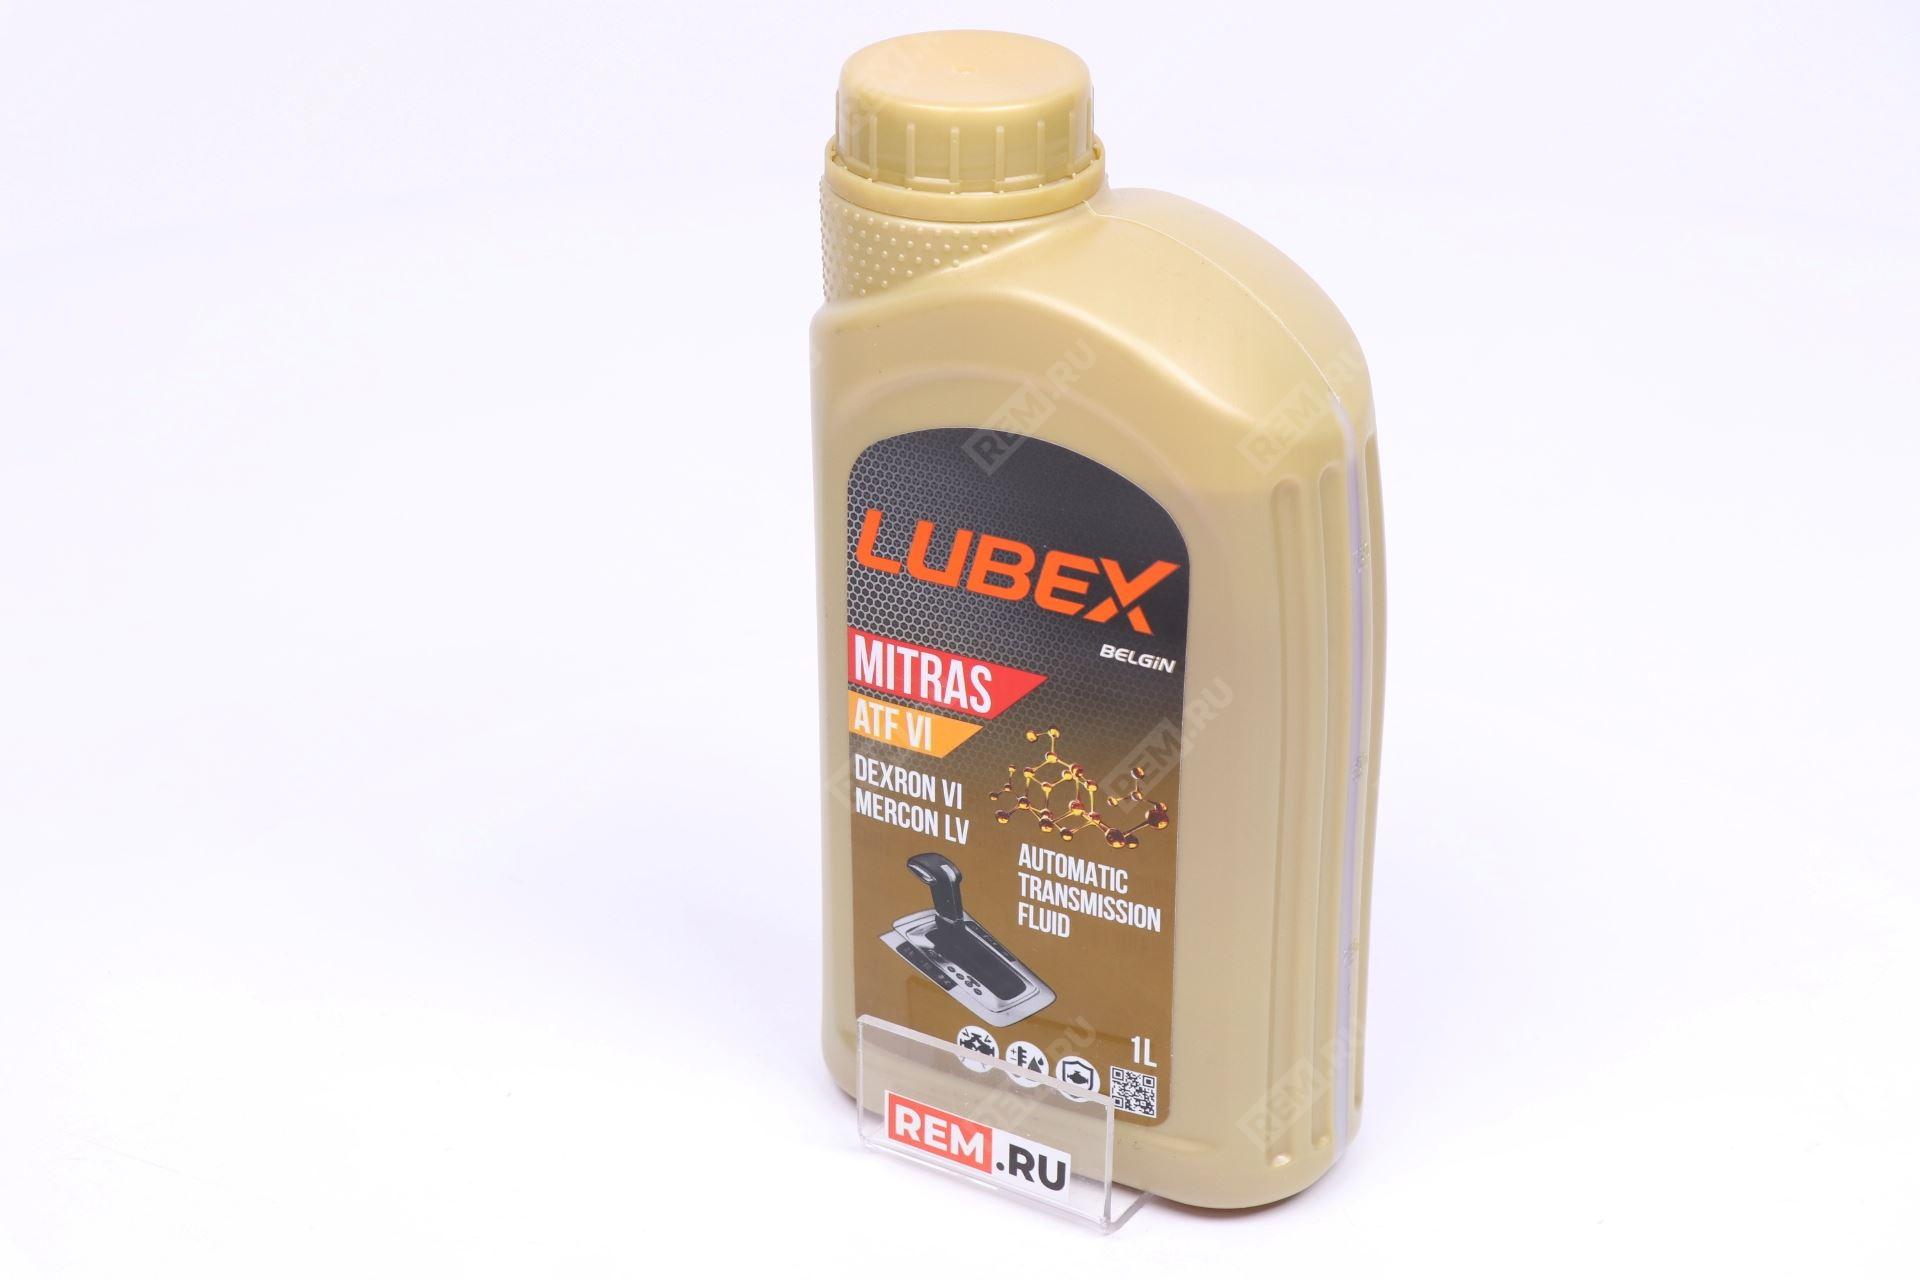  990LB00877000  масло трансмиссионное lubex mitras atf vi, 1л (фото 1)